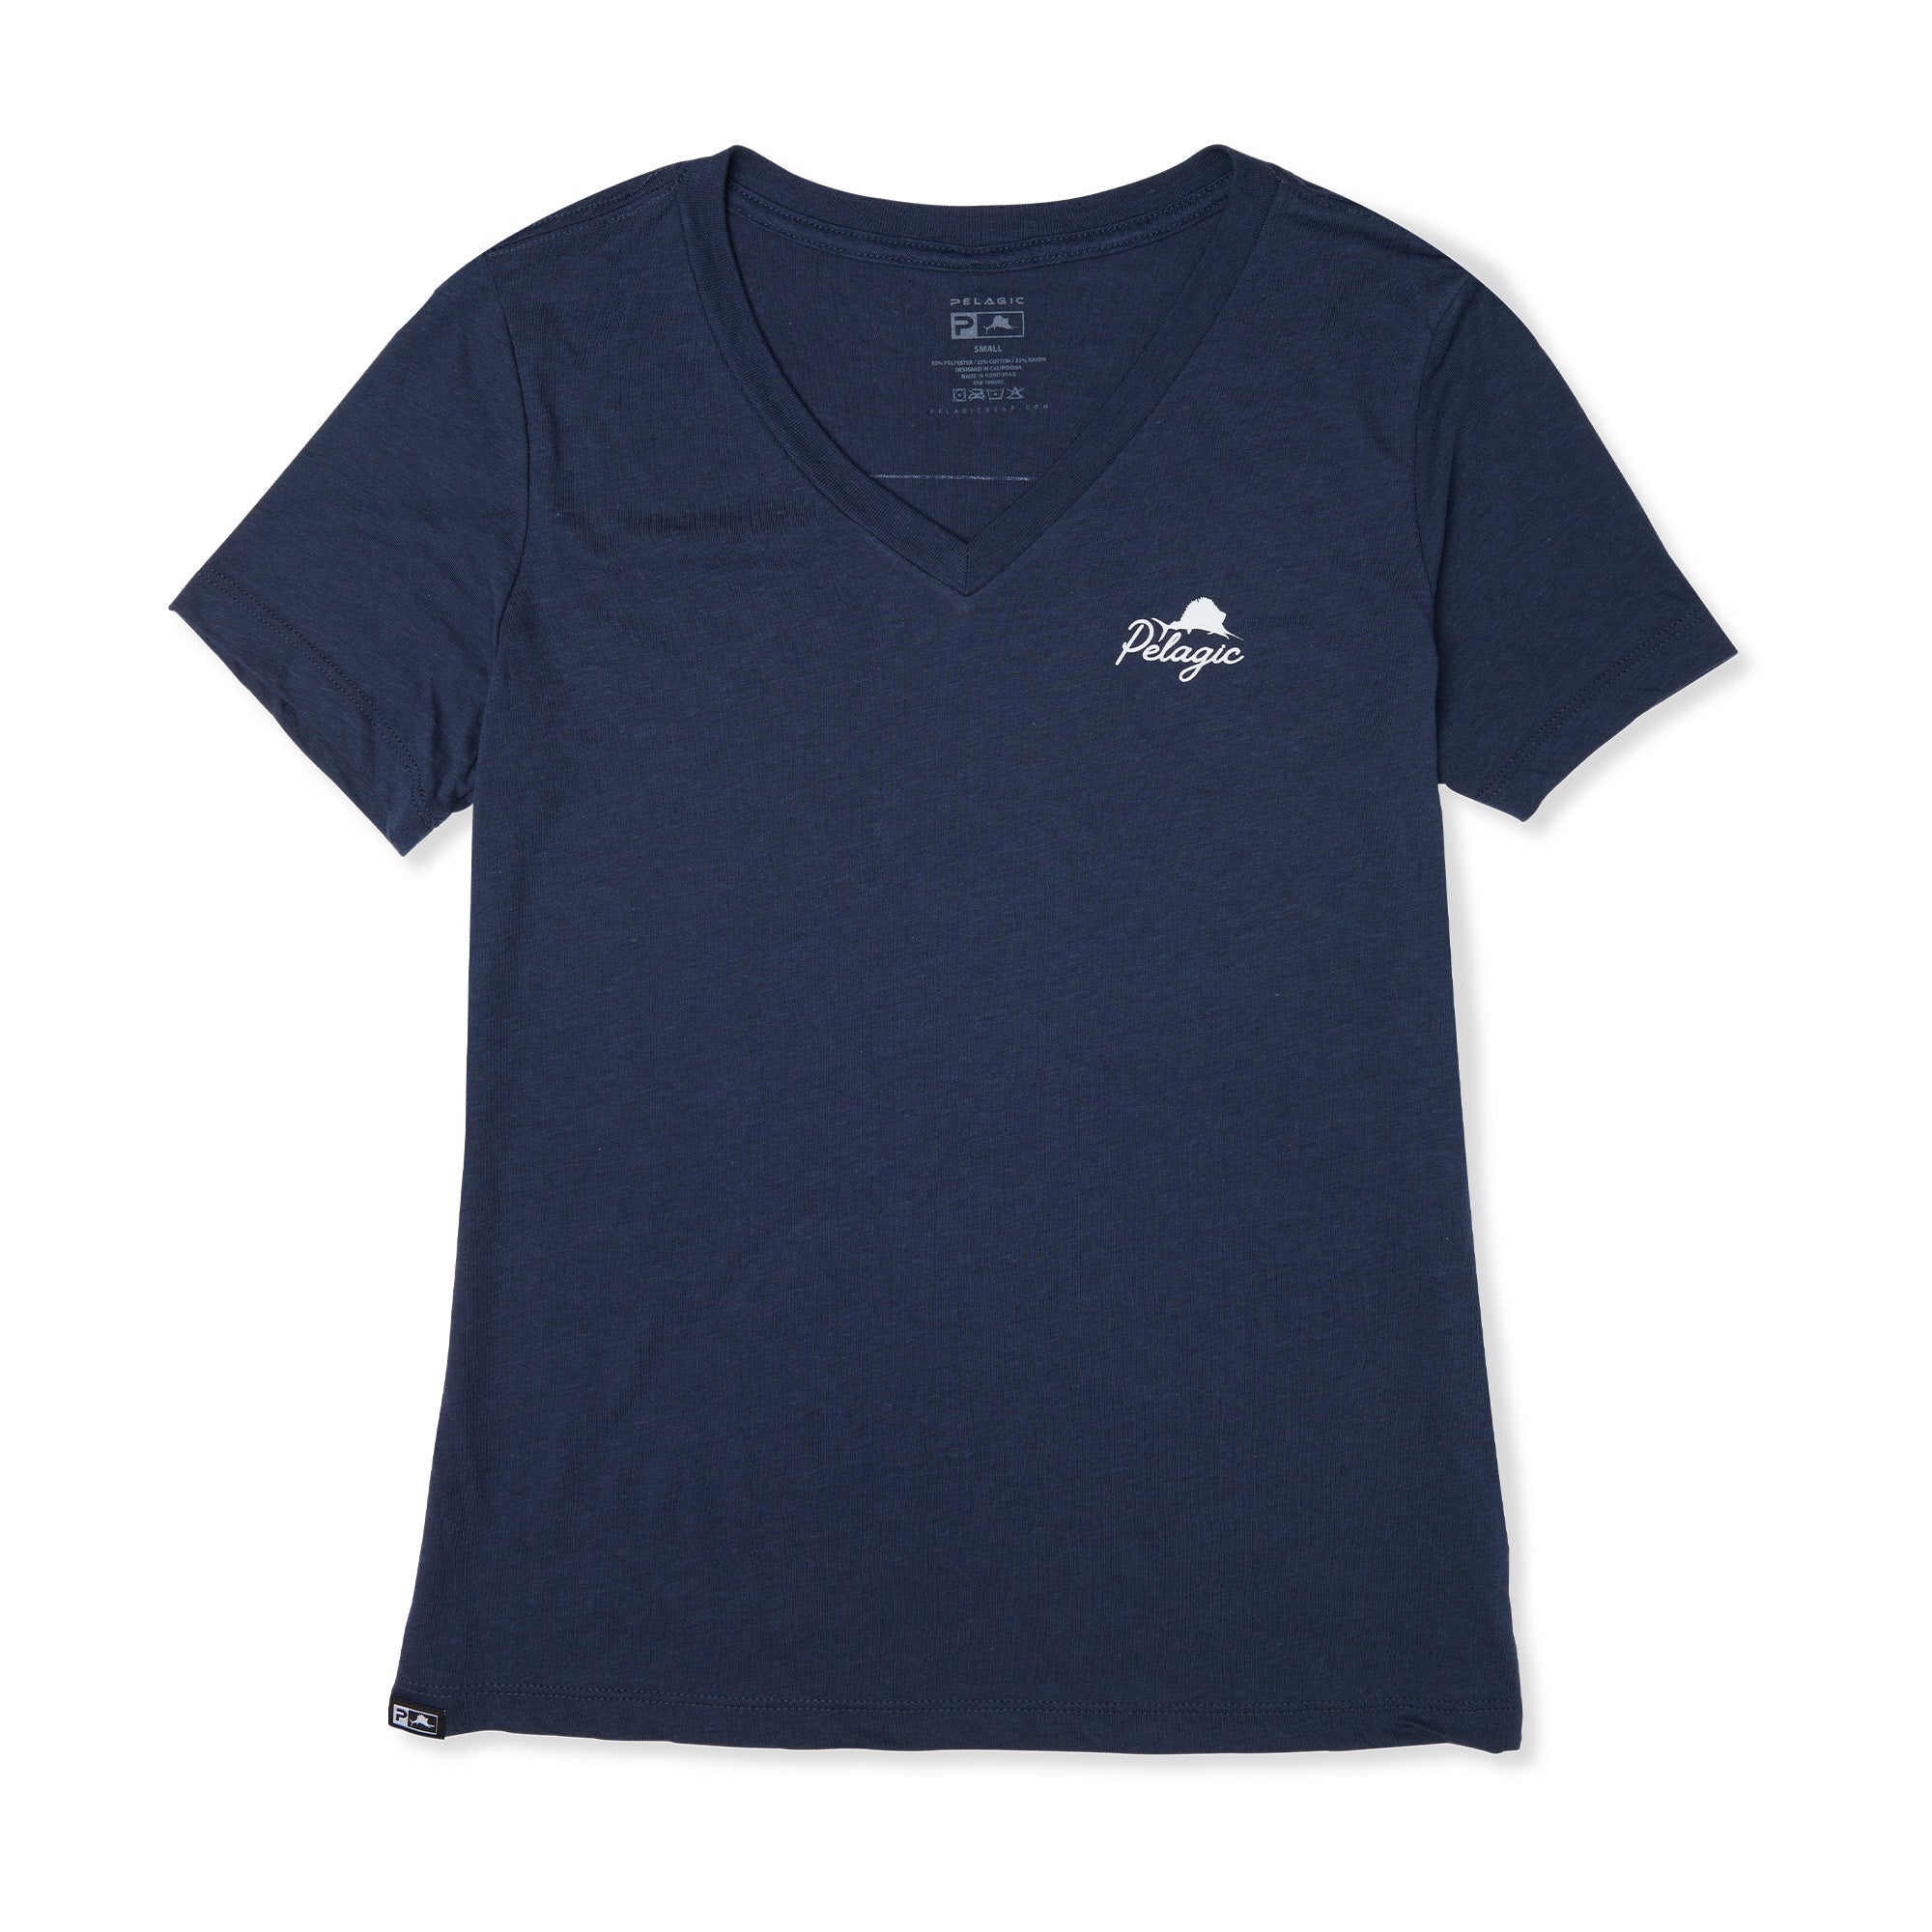 Women's Fishing T-Shirts and Tops